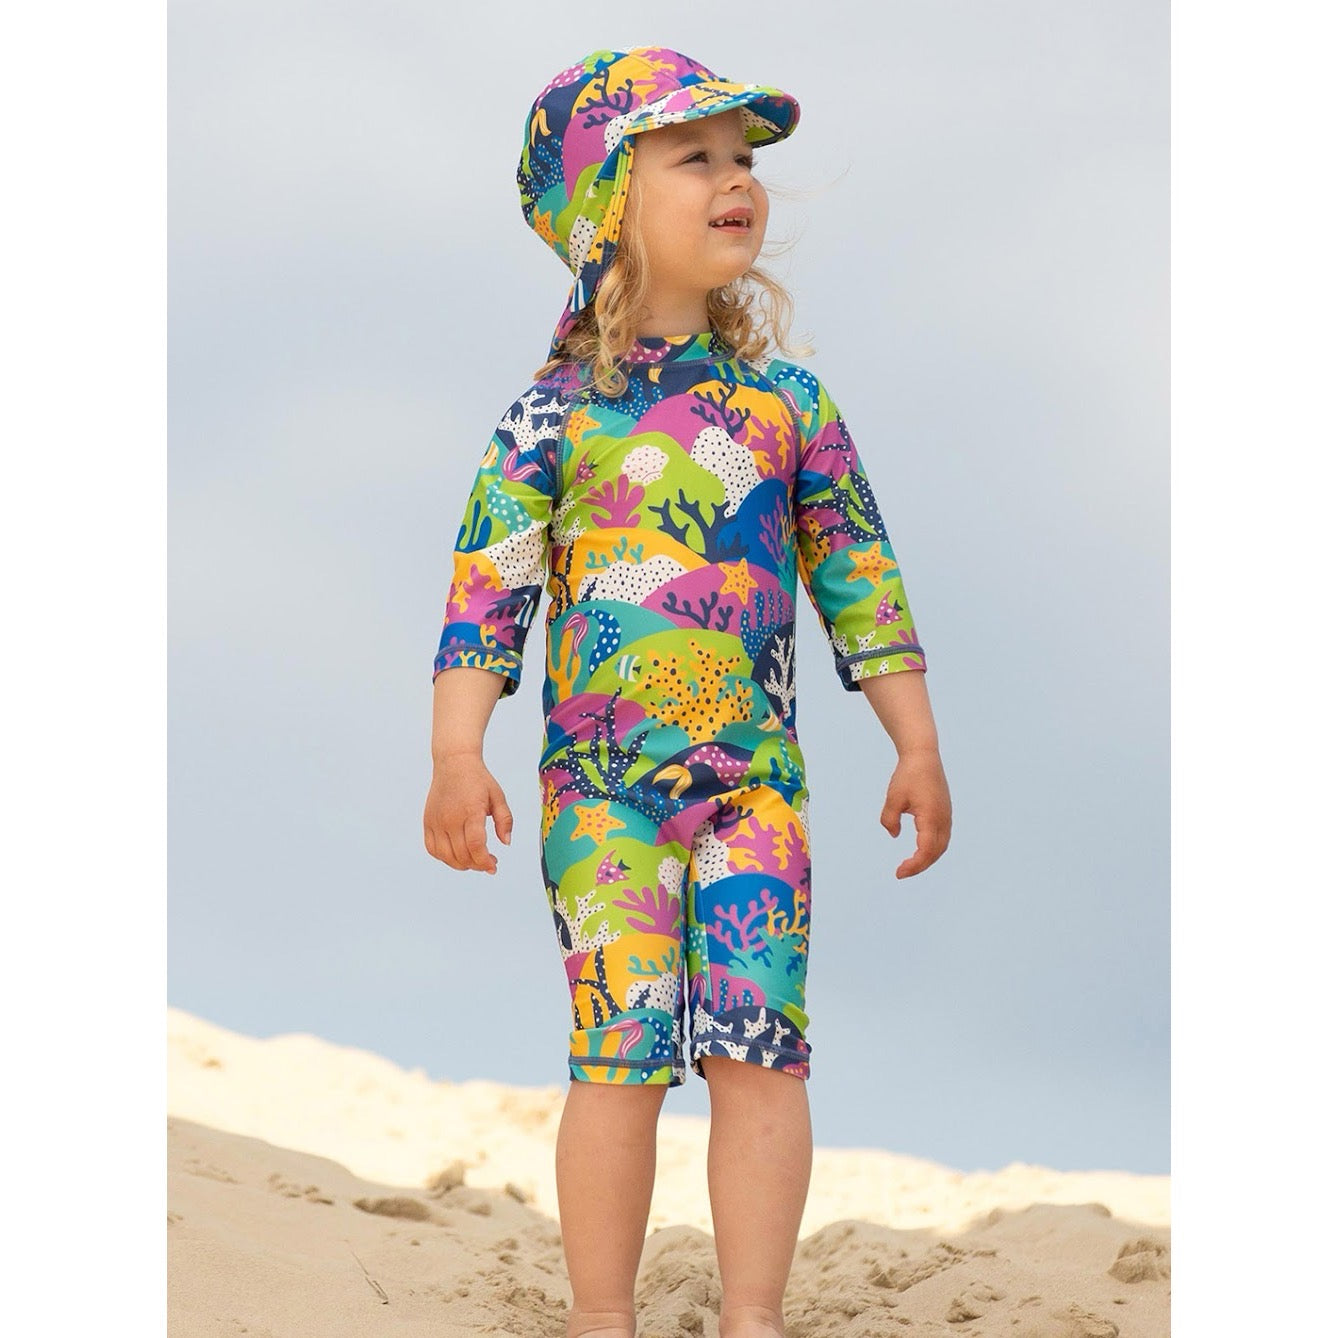 Kite Coral Reef Infant Swim Hat 3710 Clothing 0-12M / Multi,1-3YRS / Multi